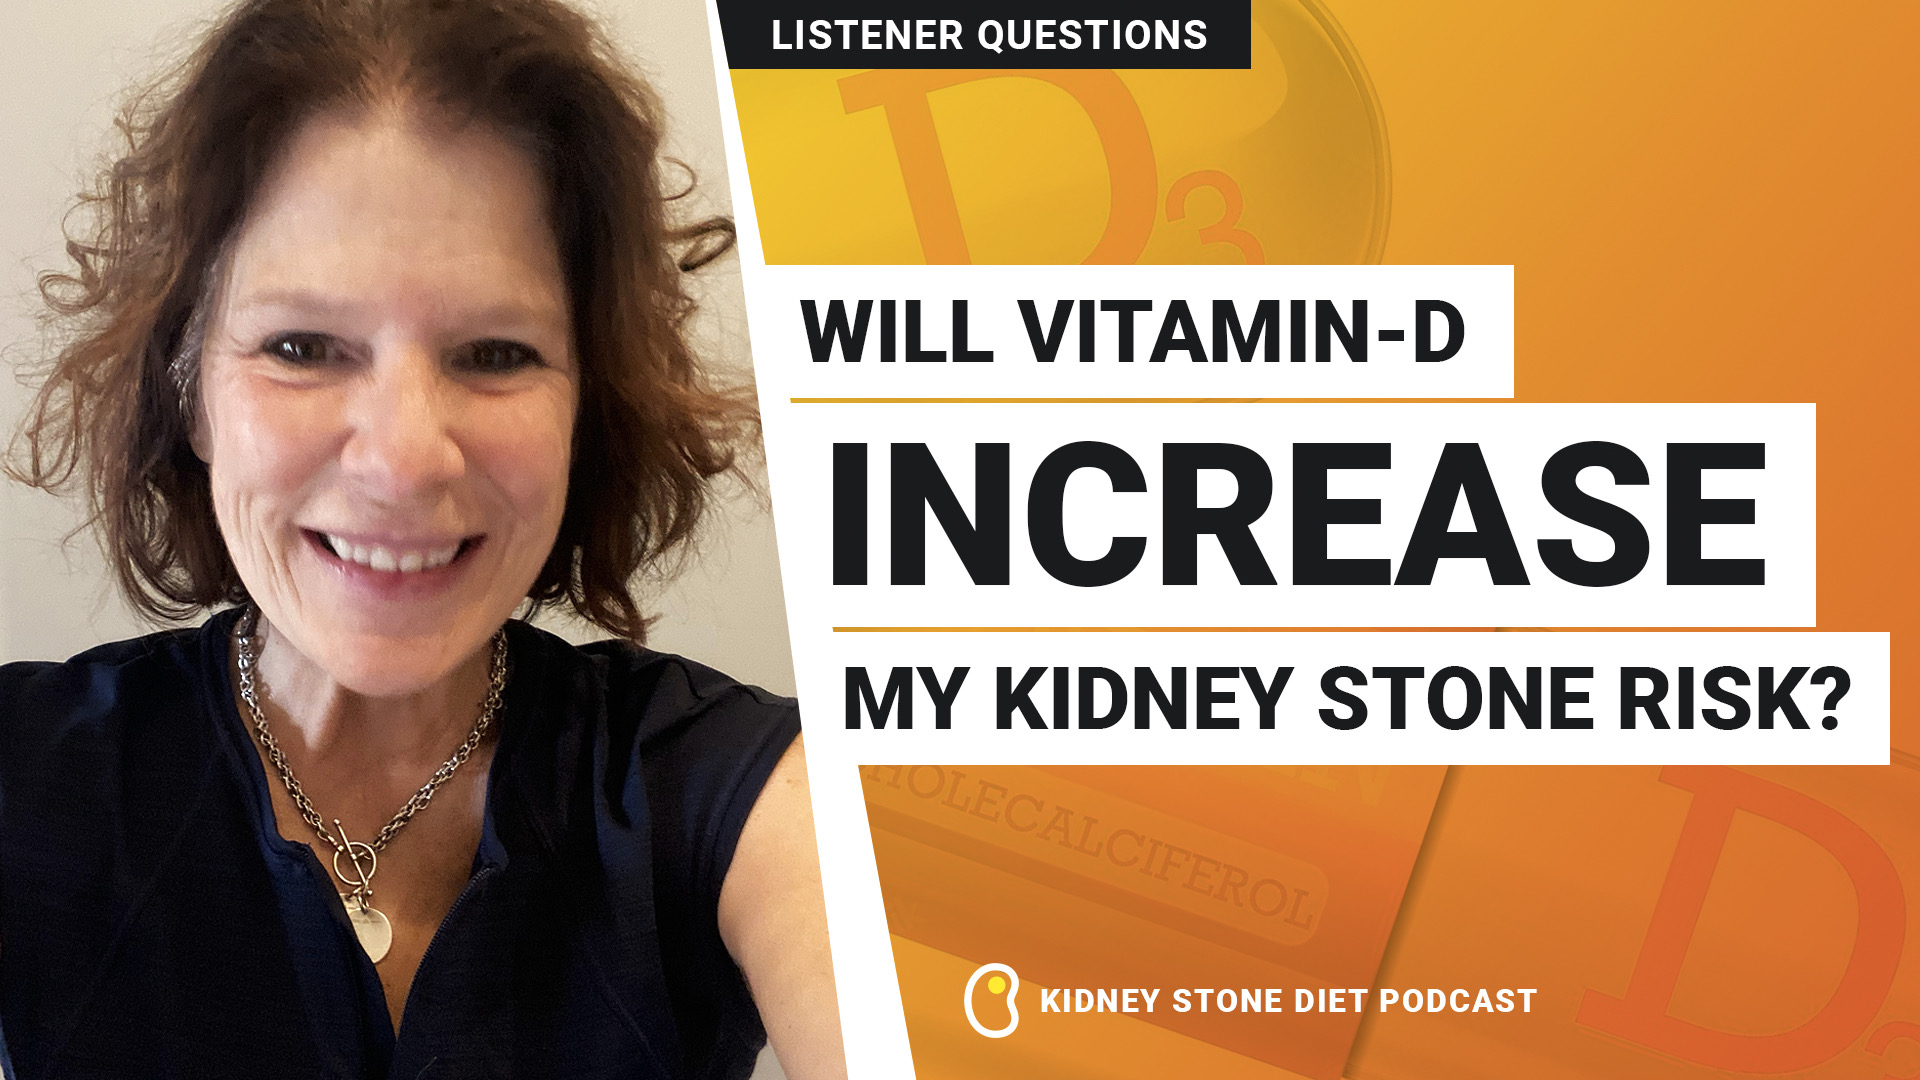 Will vitamin D increase my kidney stone risk?